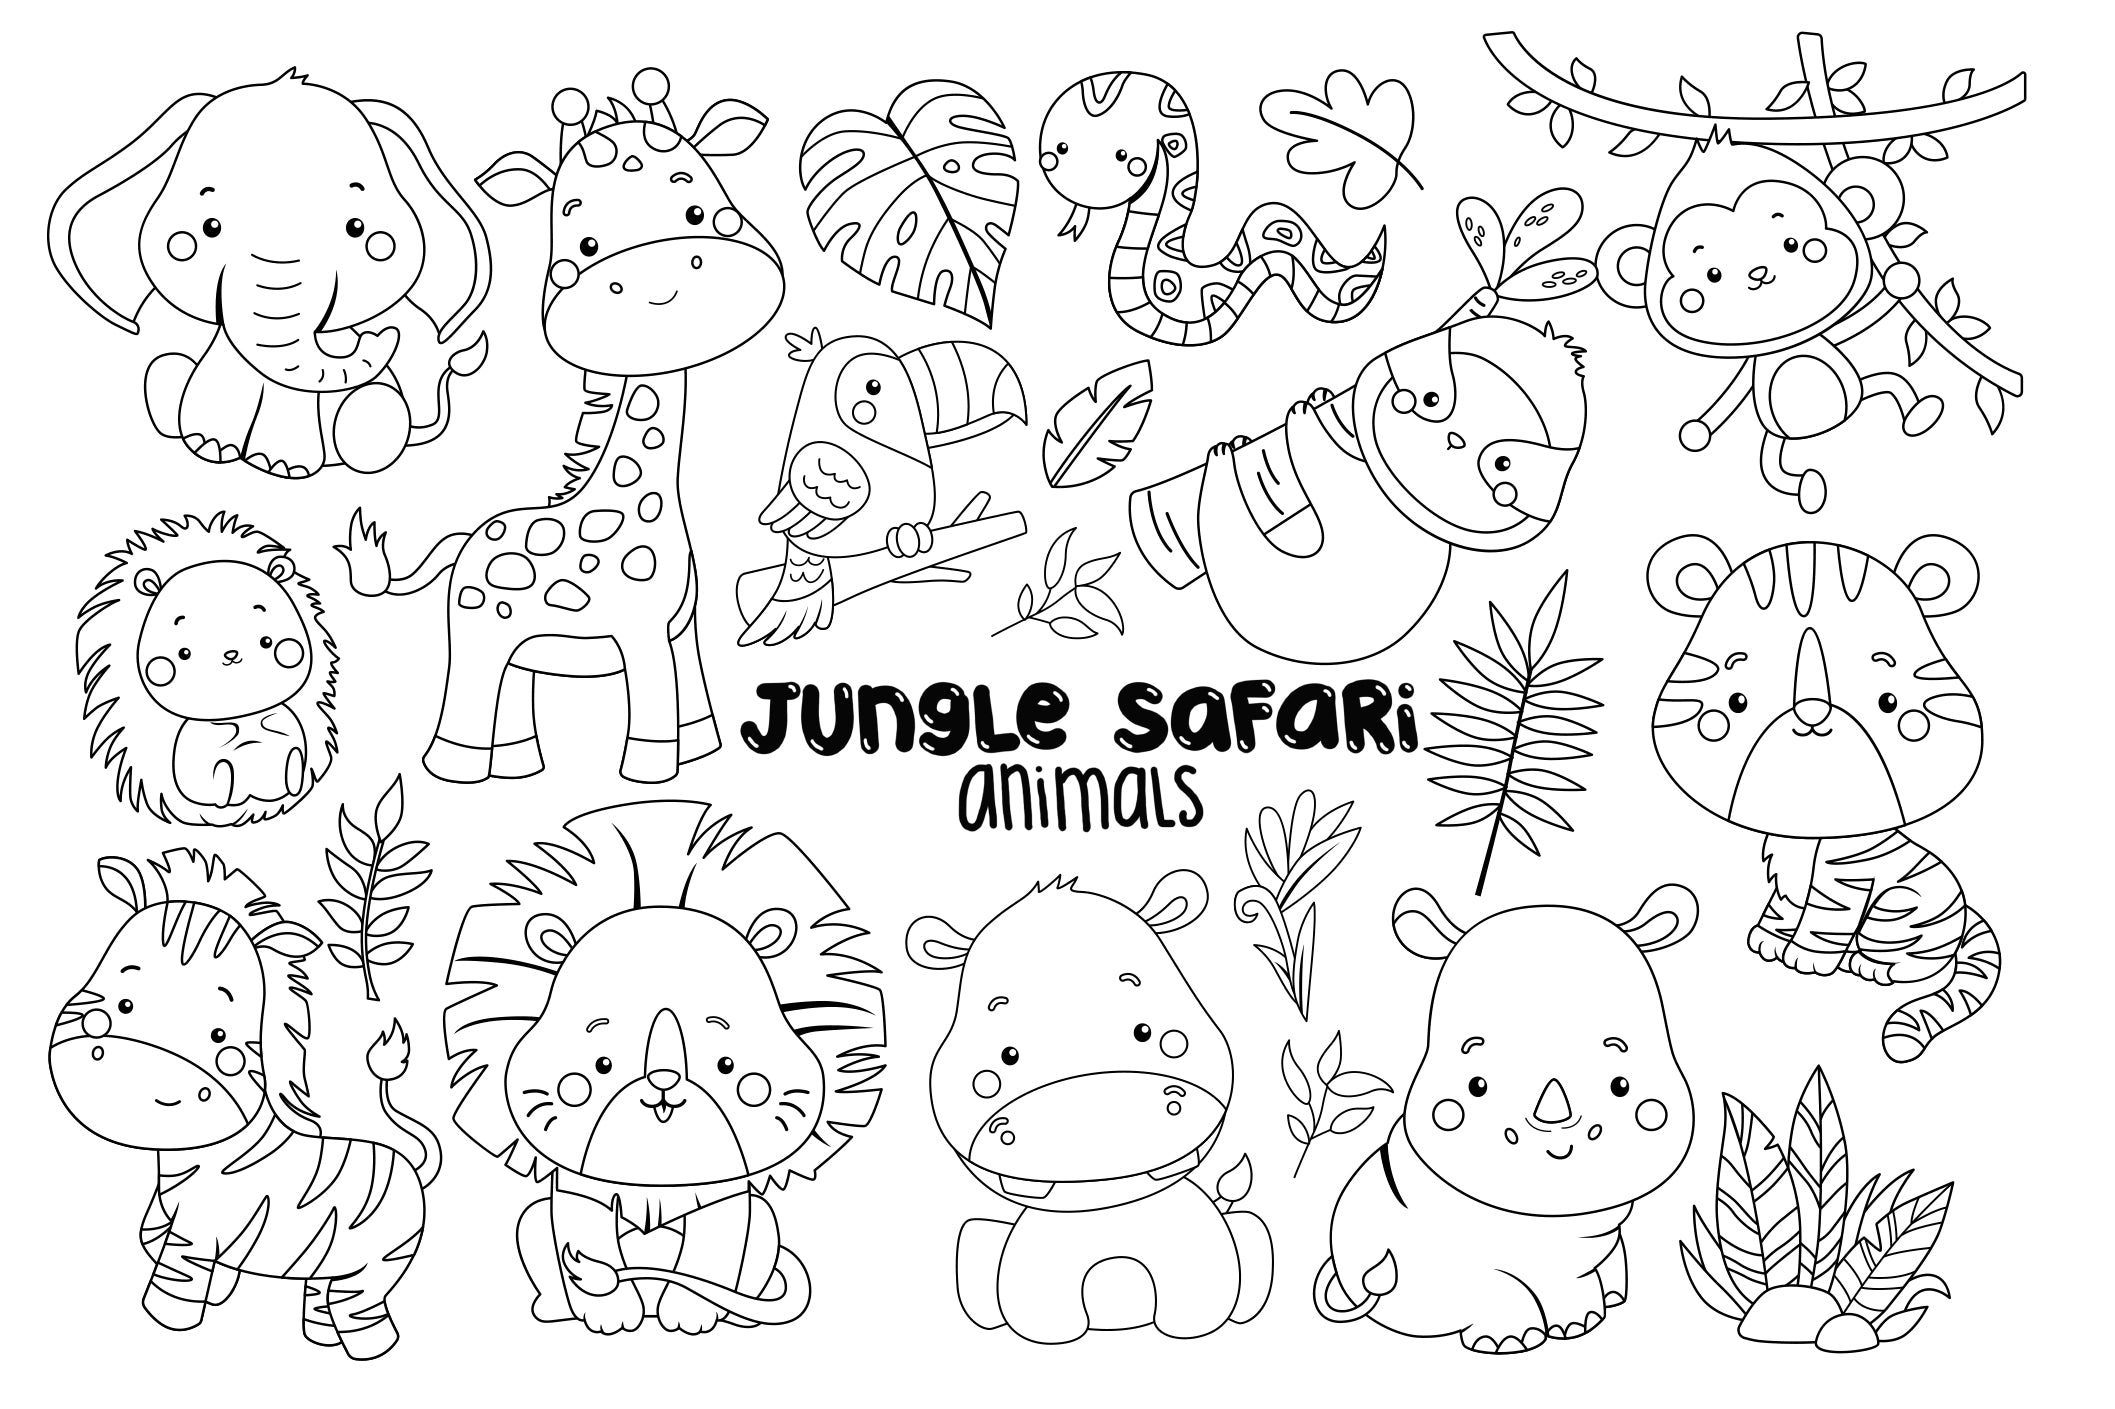 Simple drawing of a wildlife safari, kid-friendly il...